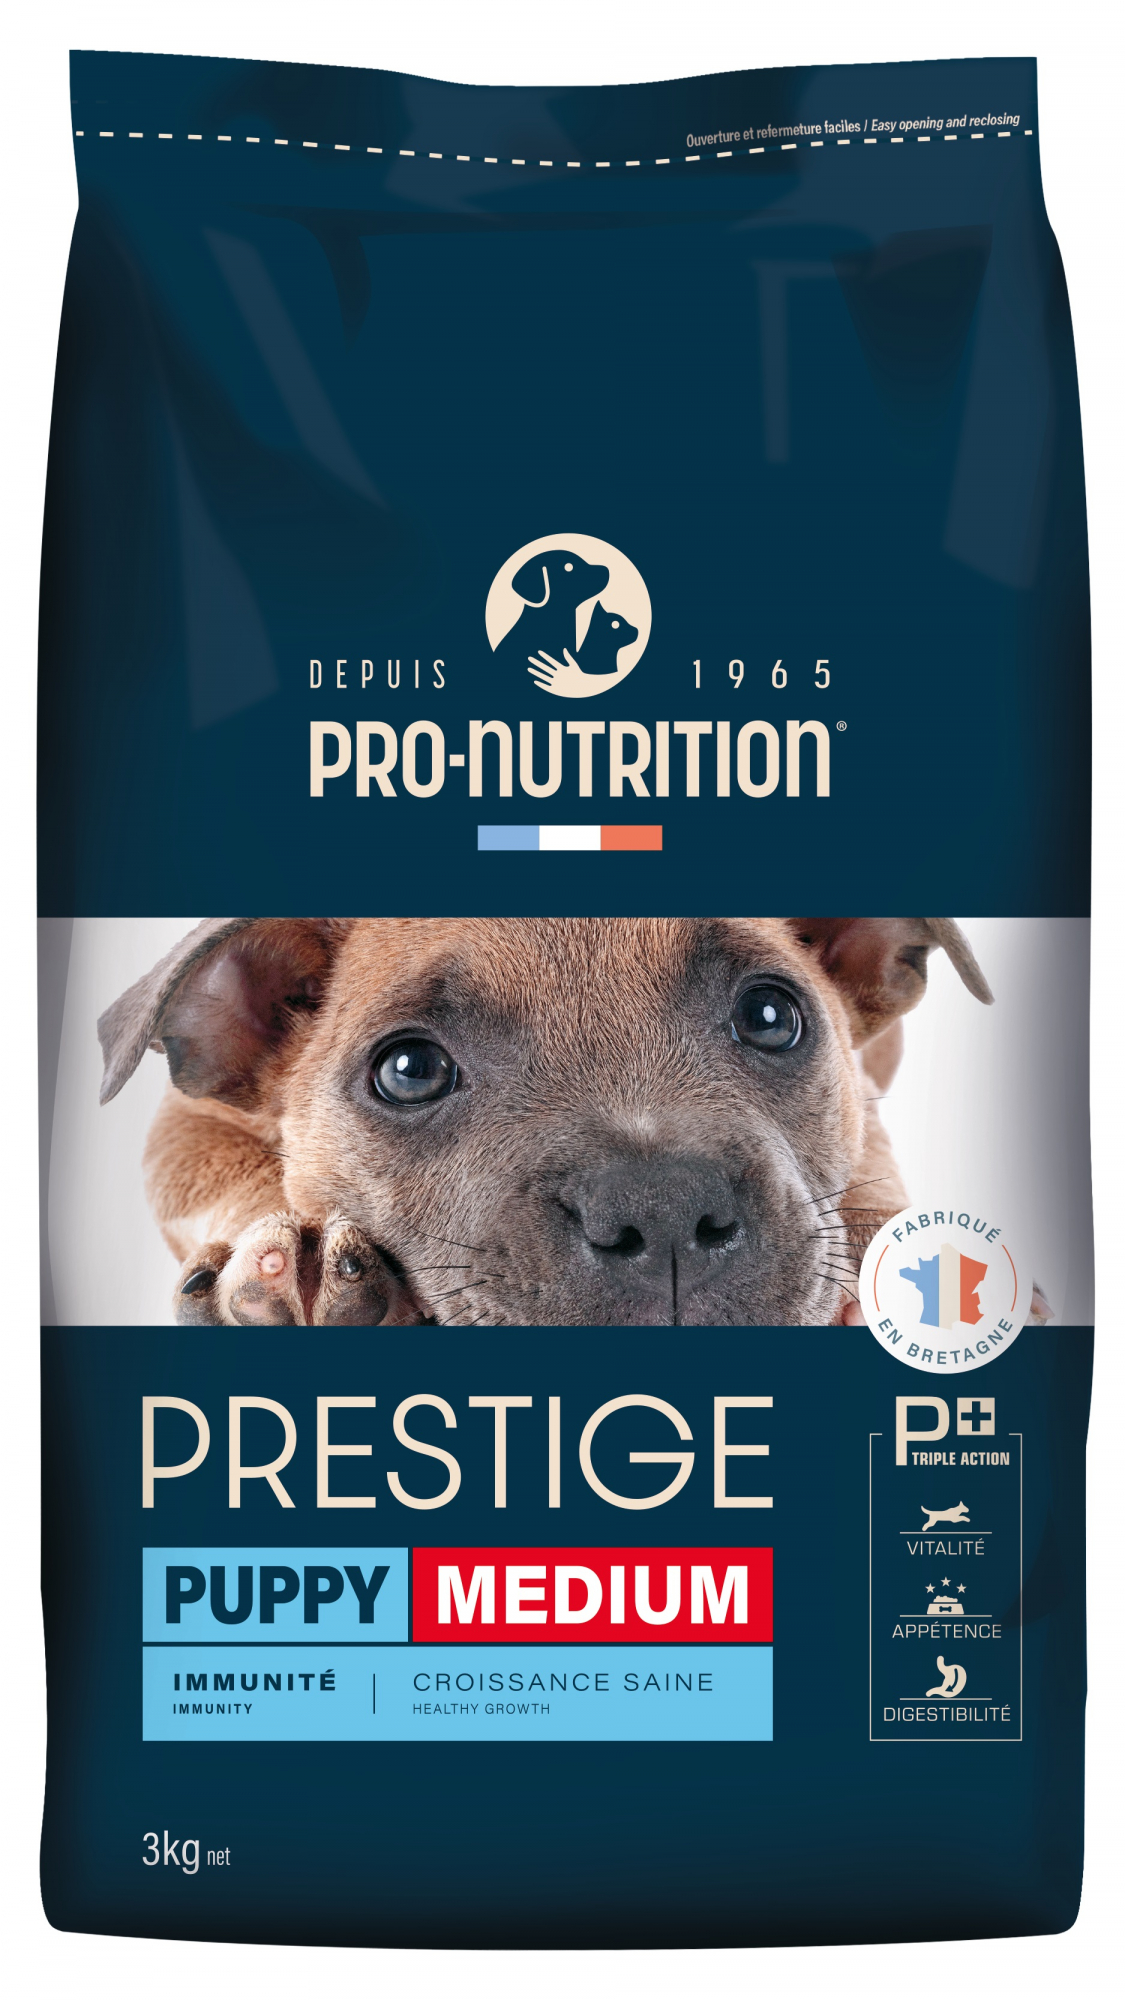 PRO-NUTRITION Flatazor PRESTIGE Puppy Medium para Cachorro de tamanho médio